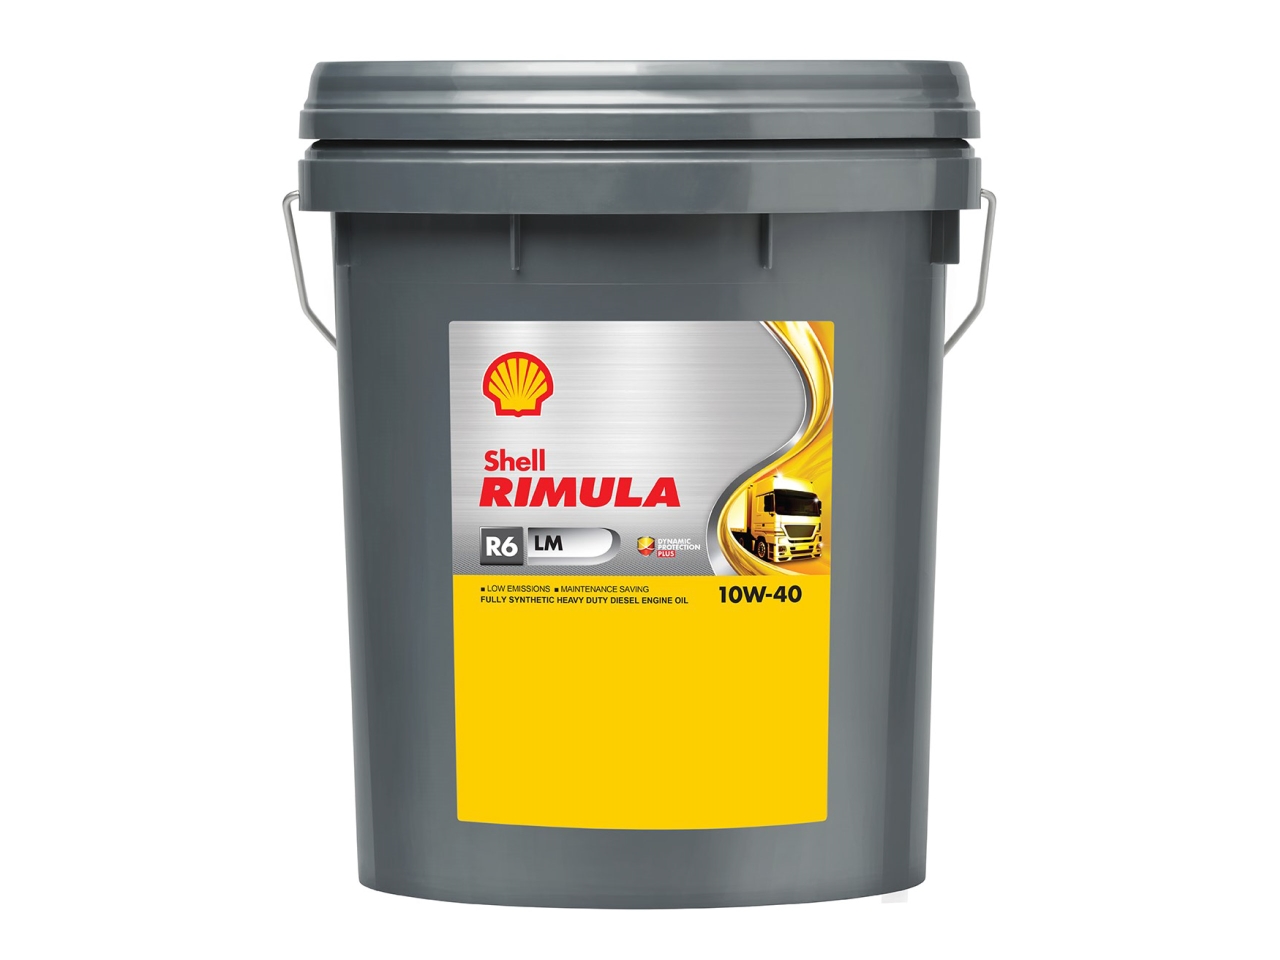 Shell Rimula R6 LM 10W-40 CK4 engine oil 20L